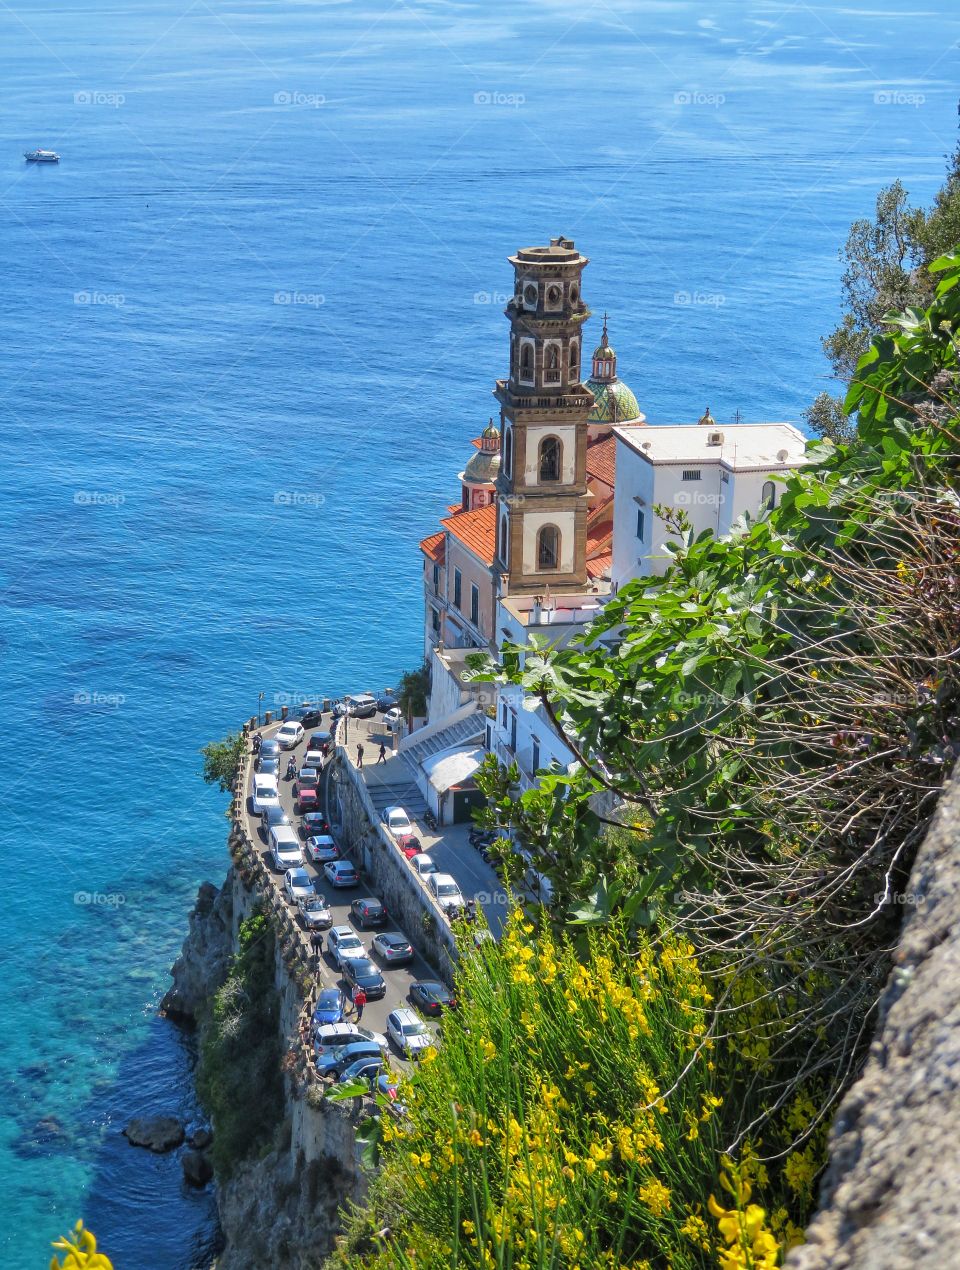 Hiking the Amalfi Coast ..... arriving in Atrani